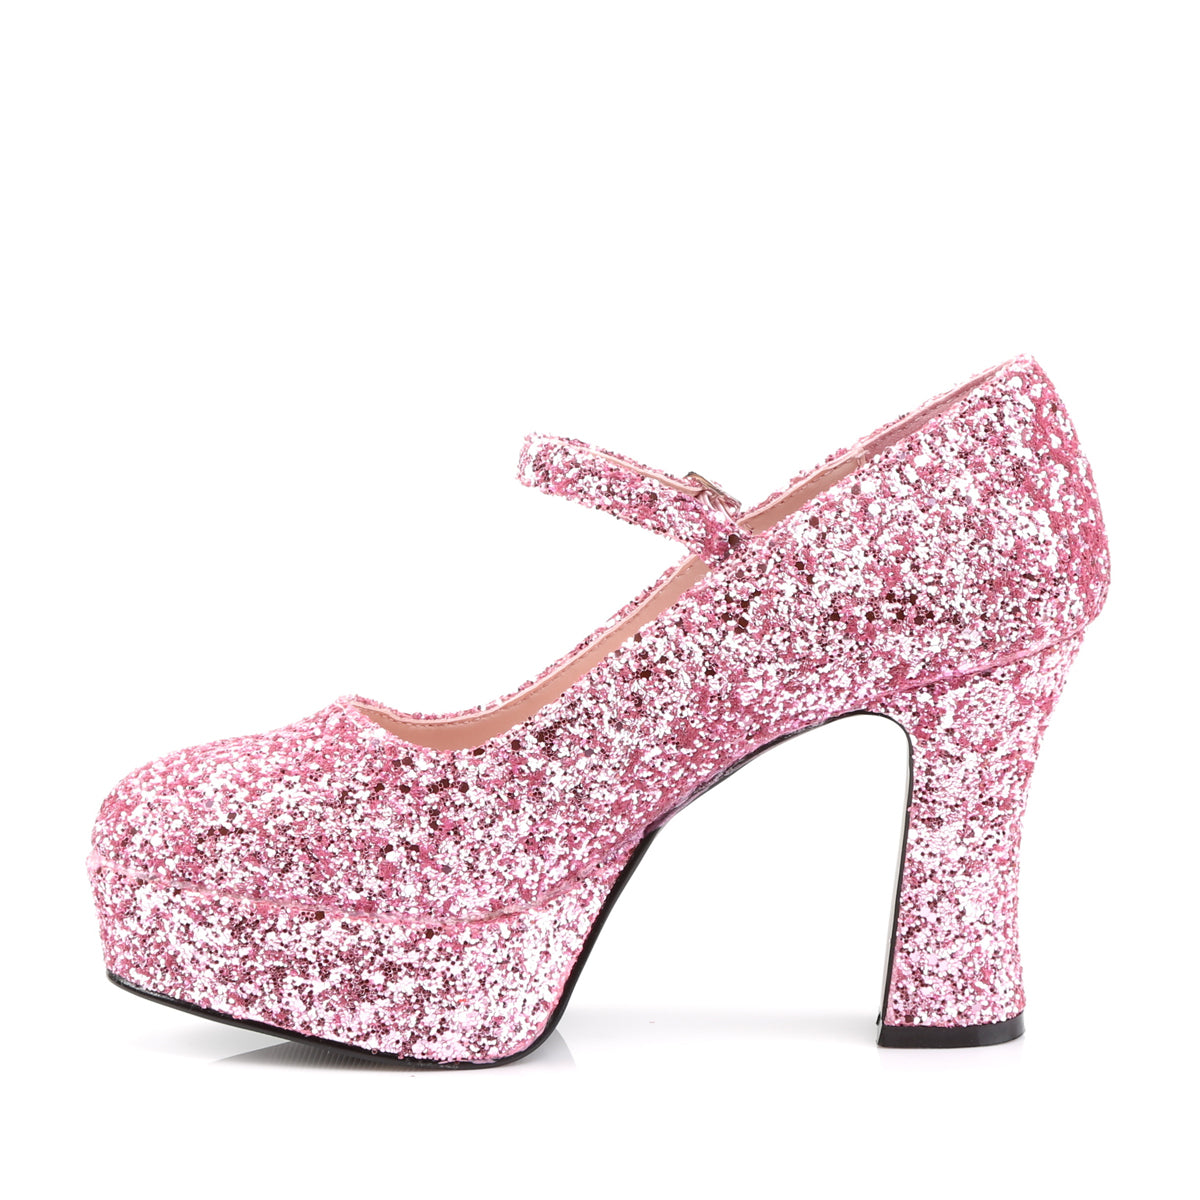 MARYJANE-50G Funtasma Fantasy B Pink Gltr Women's Shoes [Fancy Dress Costume Shoes]